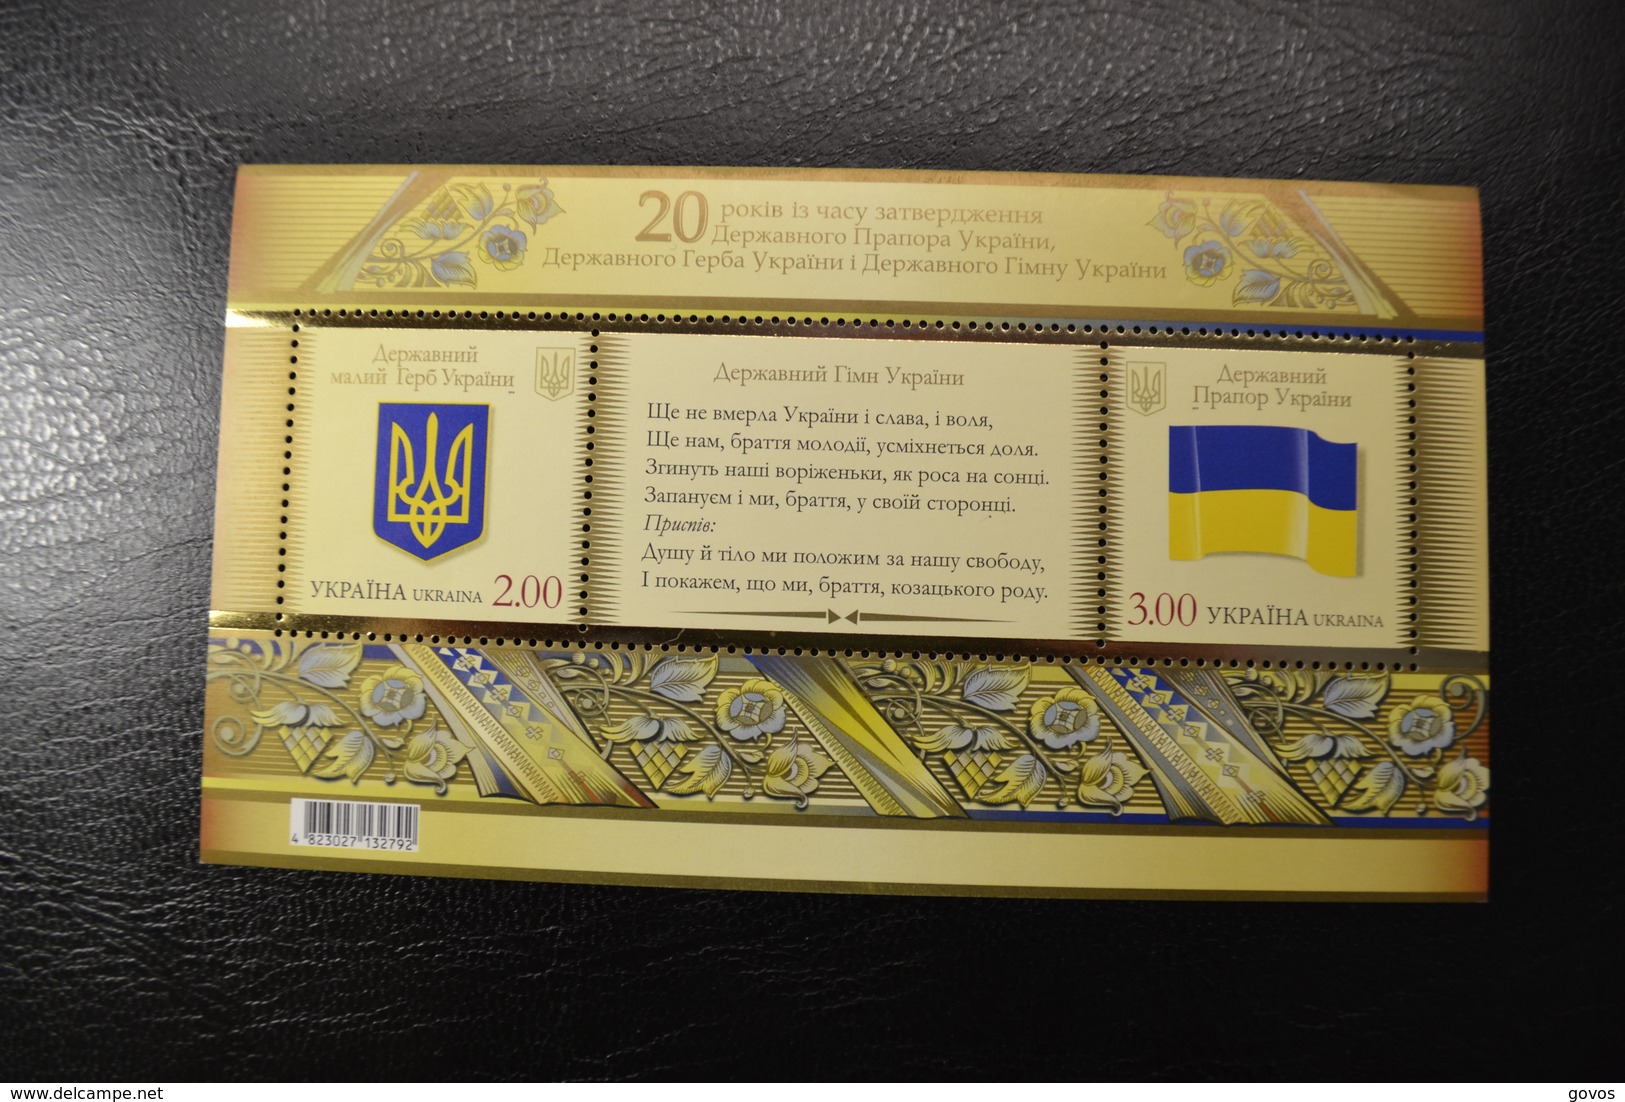 Stamps Ukraine 2012 National Anthem And Coat Of Arms Of Ukraine (700026) - Ukraine